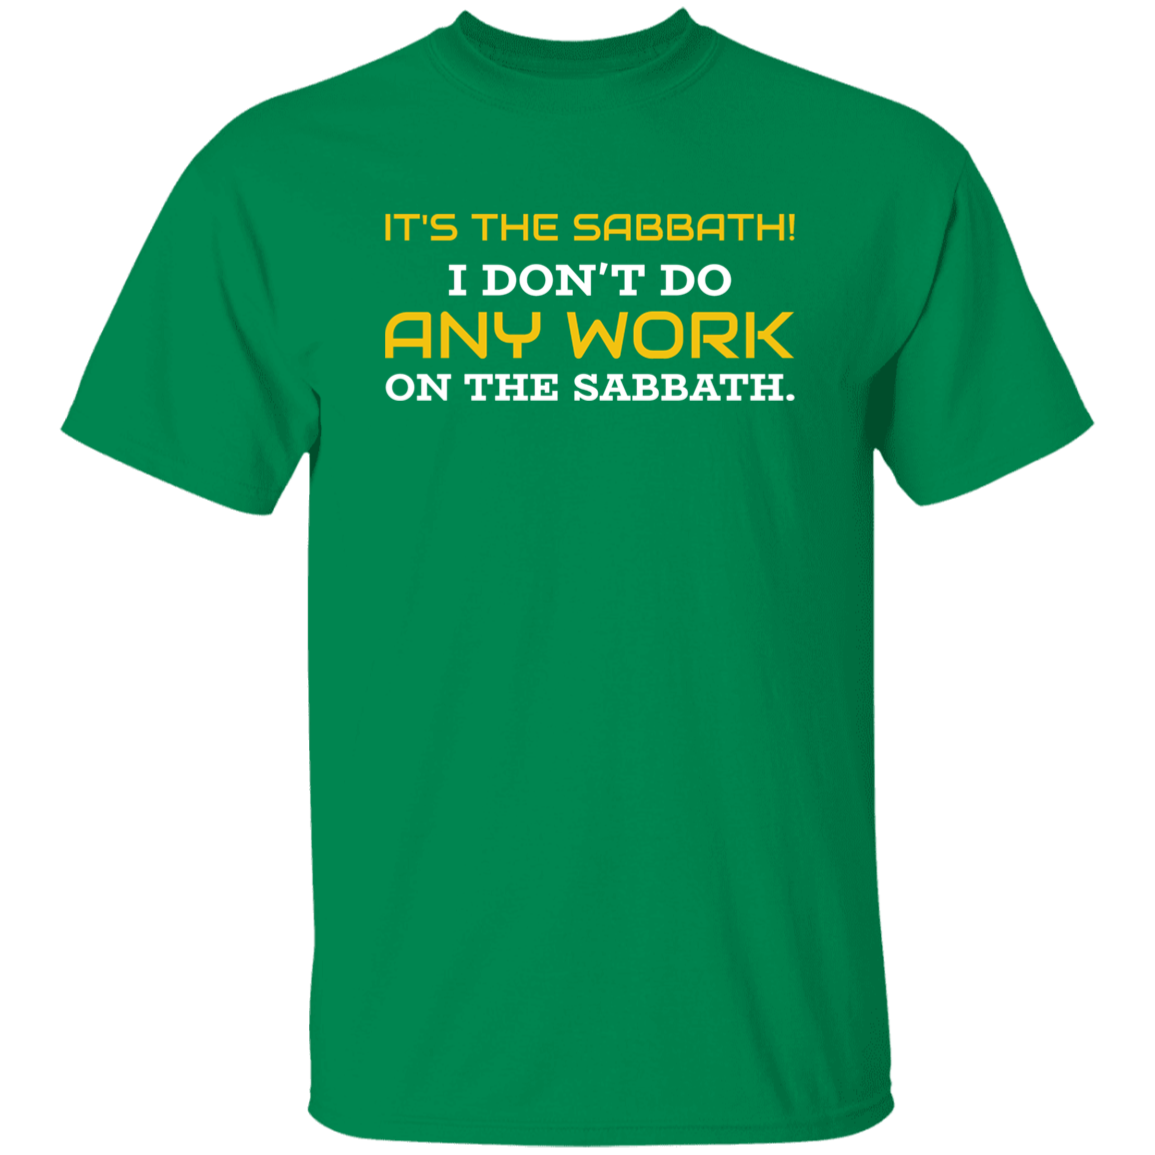 It's The Sabbath T-Shirt